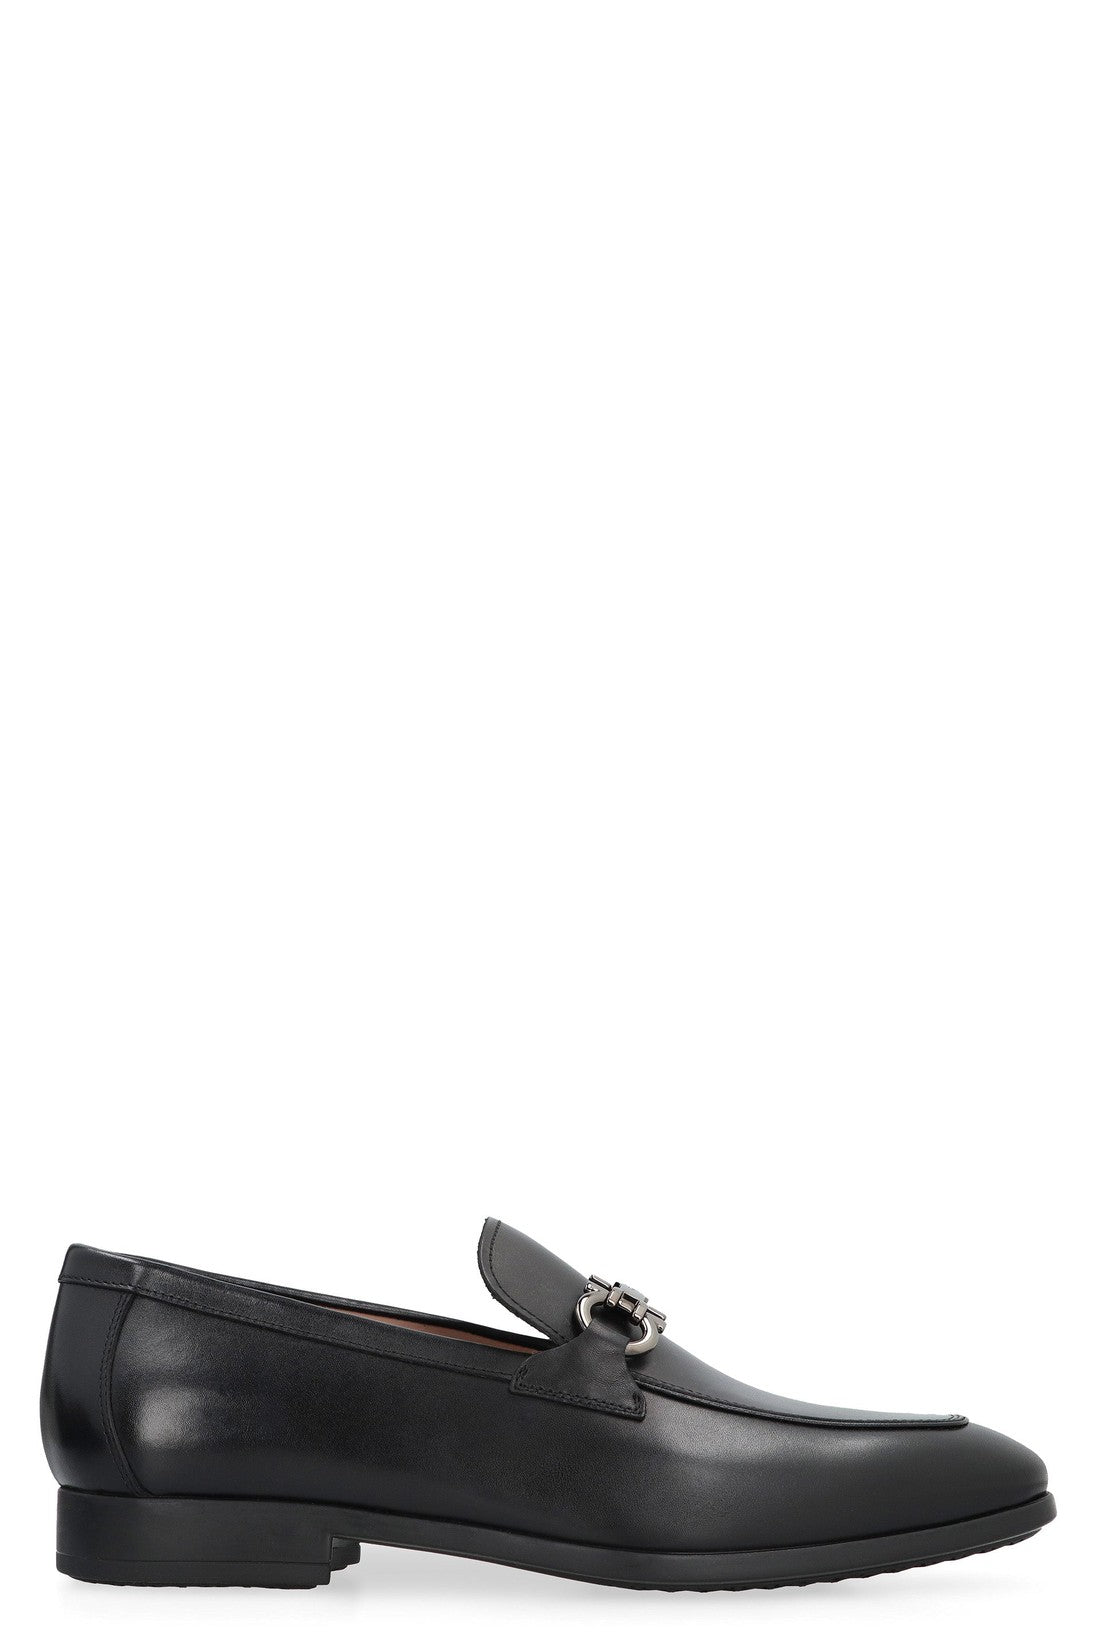 FERRAGAMO-OUTLET-SALE-Leather loafers-ARCHIVIST